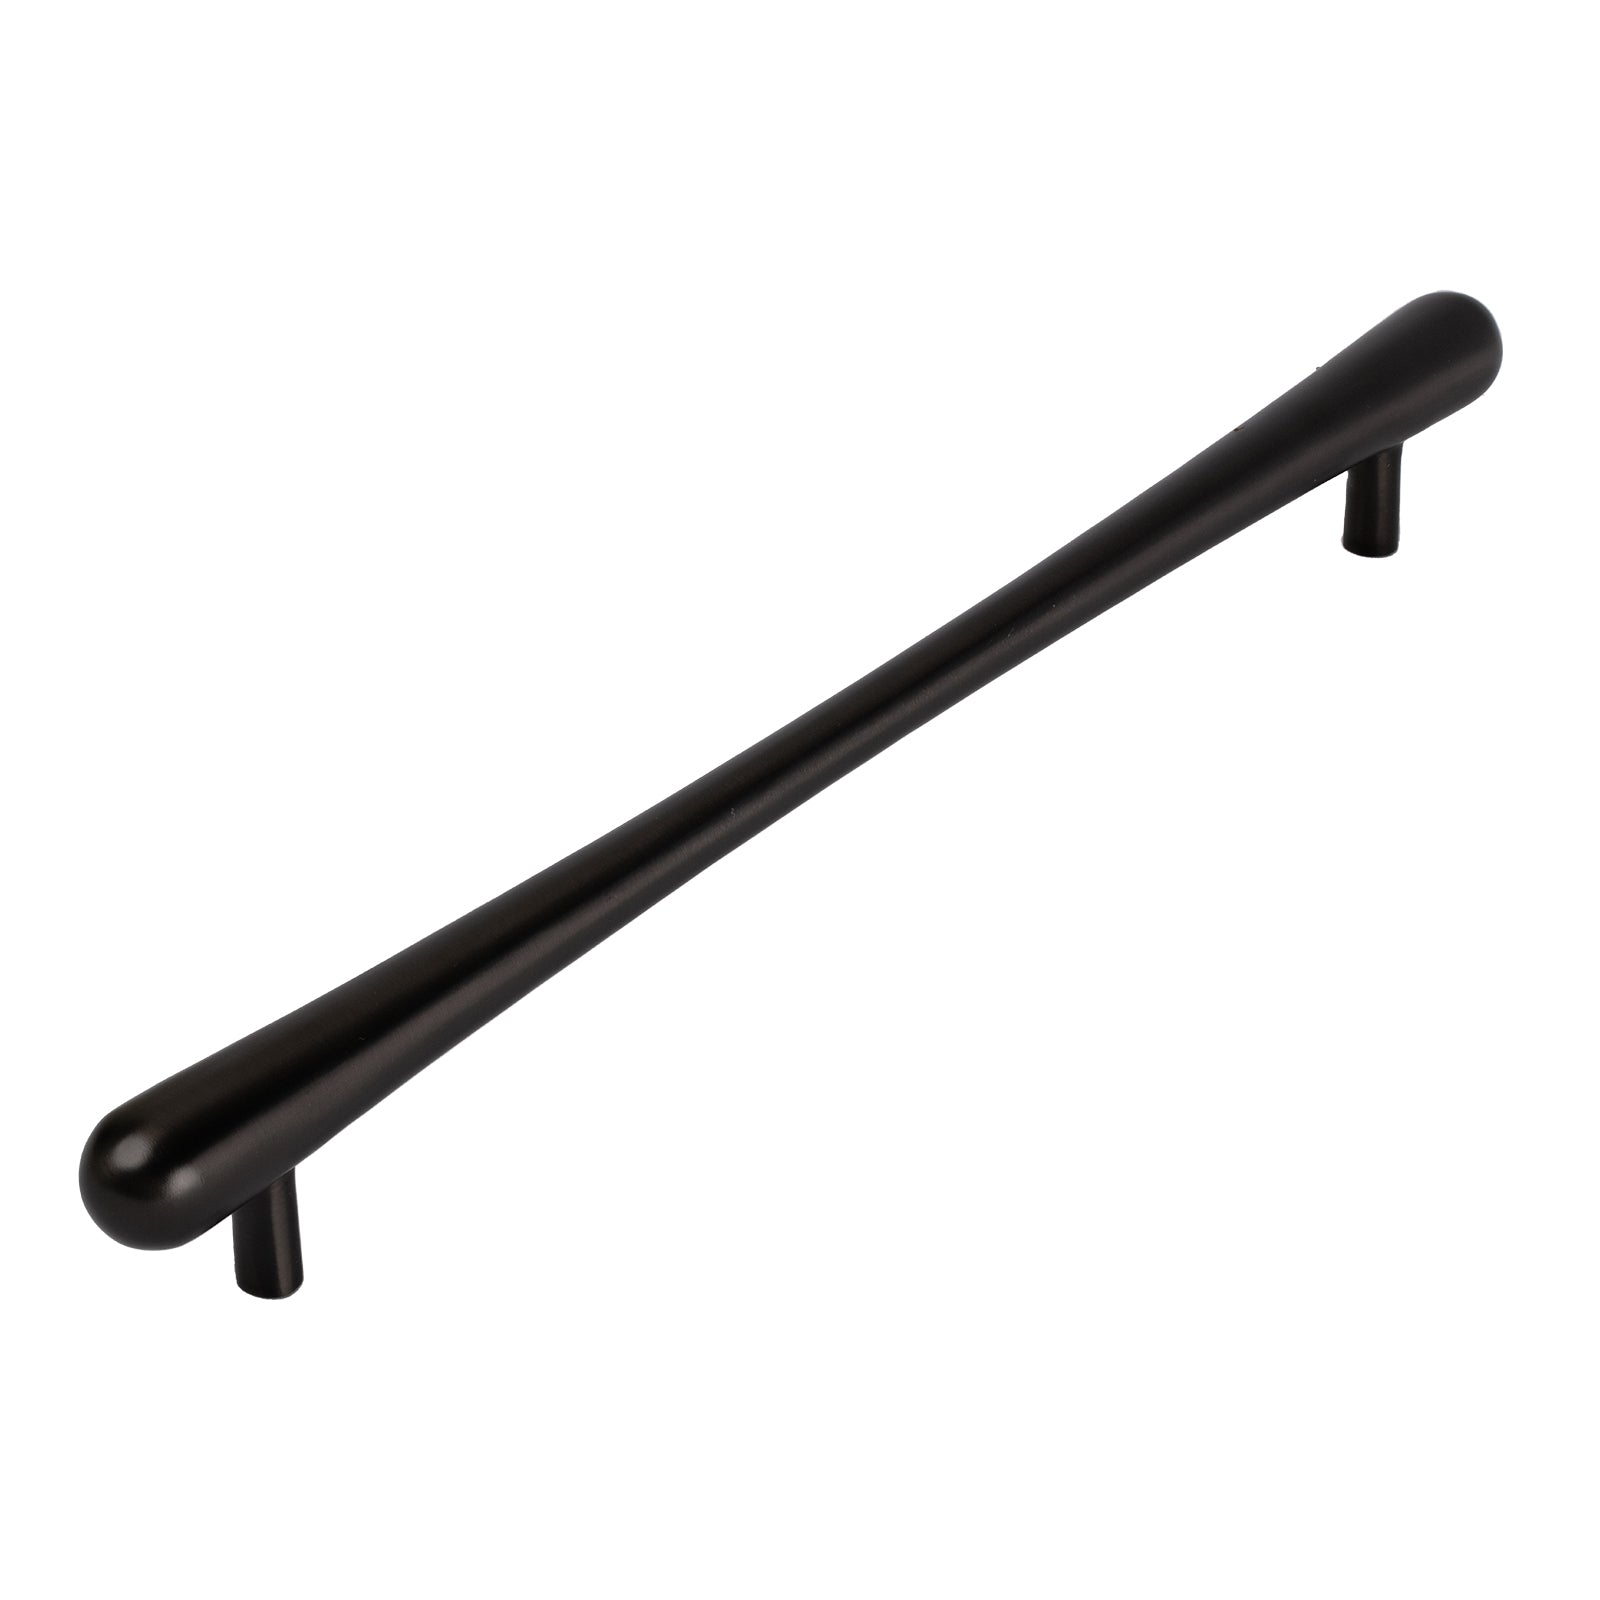 bronze modern pull handle, kitchen cabinet handle, long bar handle